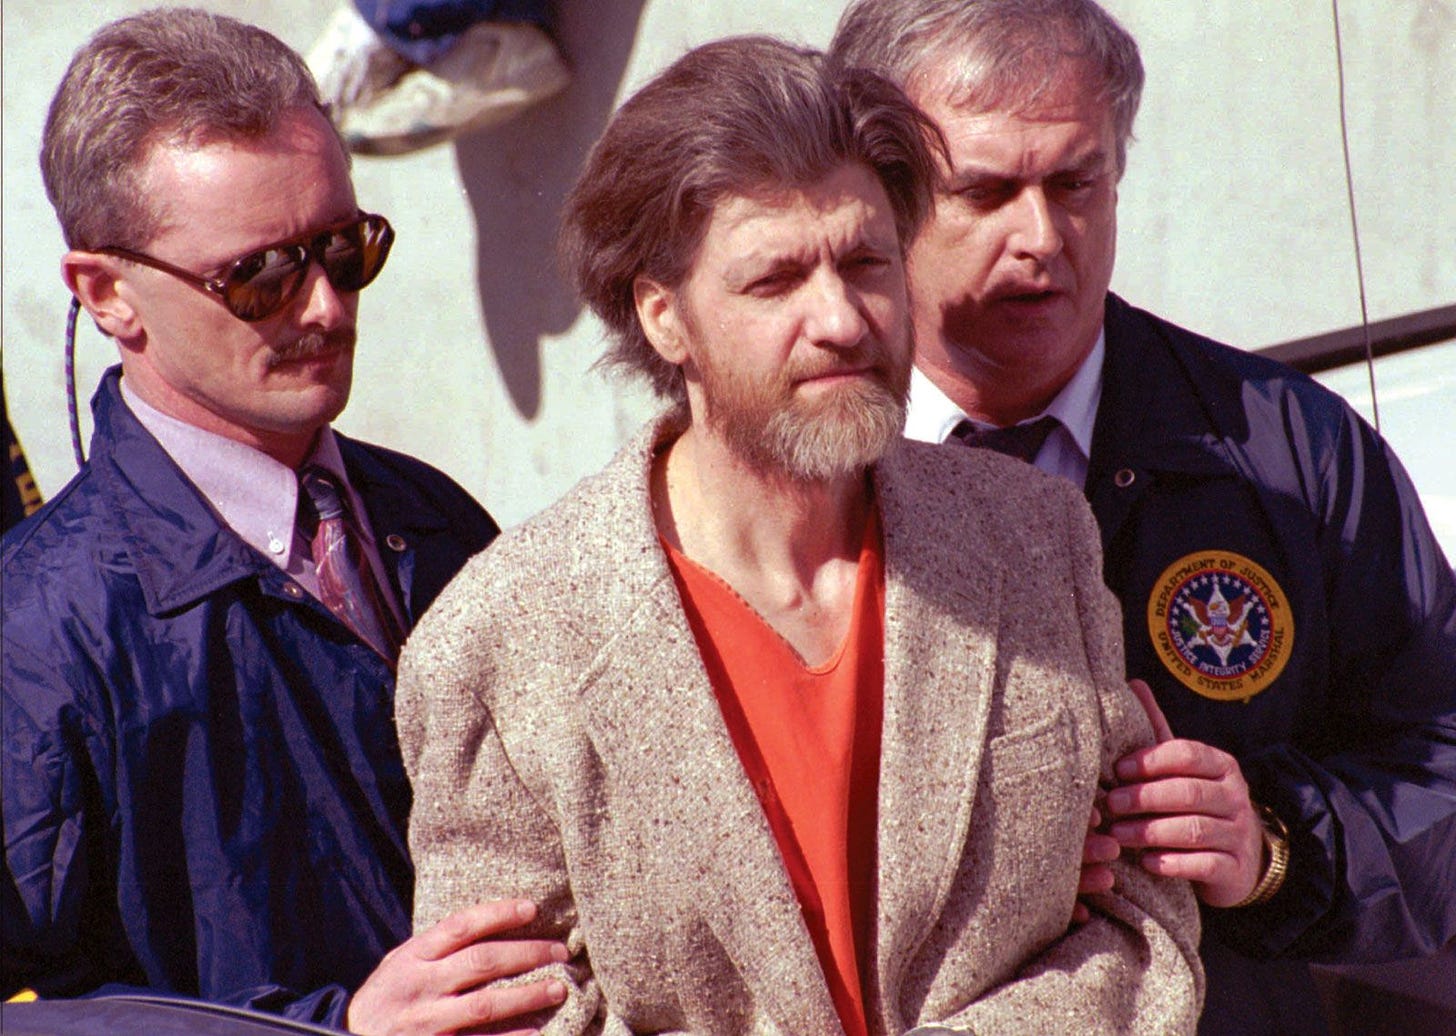 Ted Kaczynski | Biography, Manifesto, & UNABOM Case | Britannica